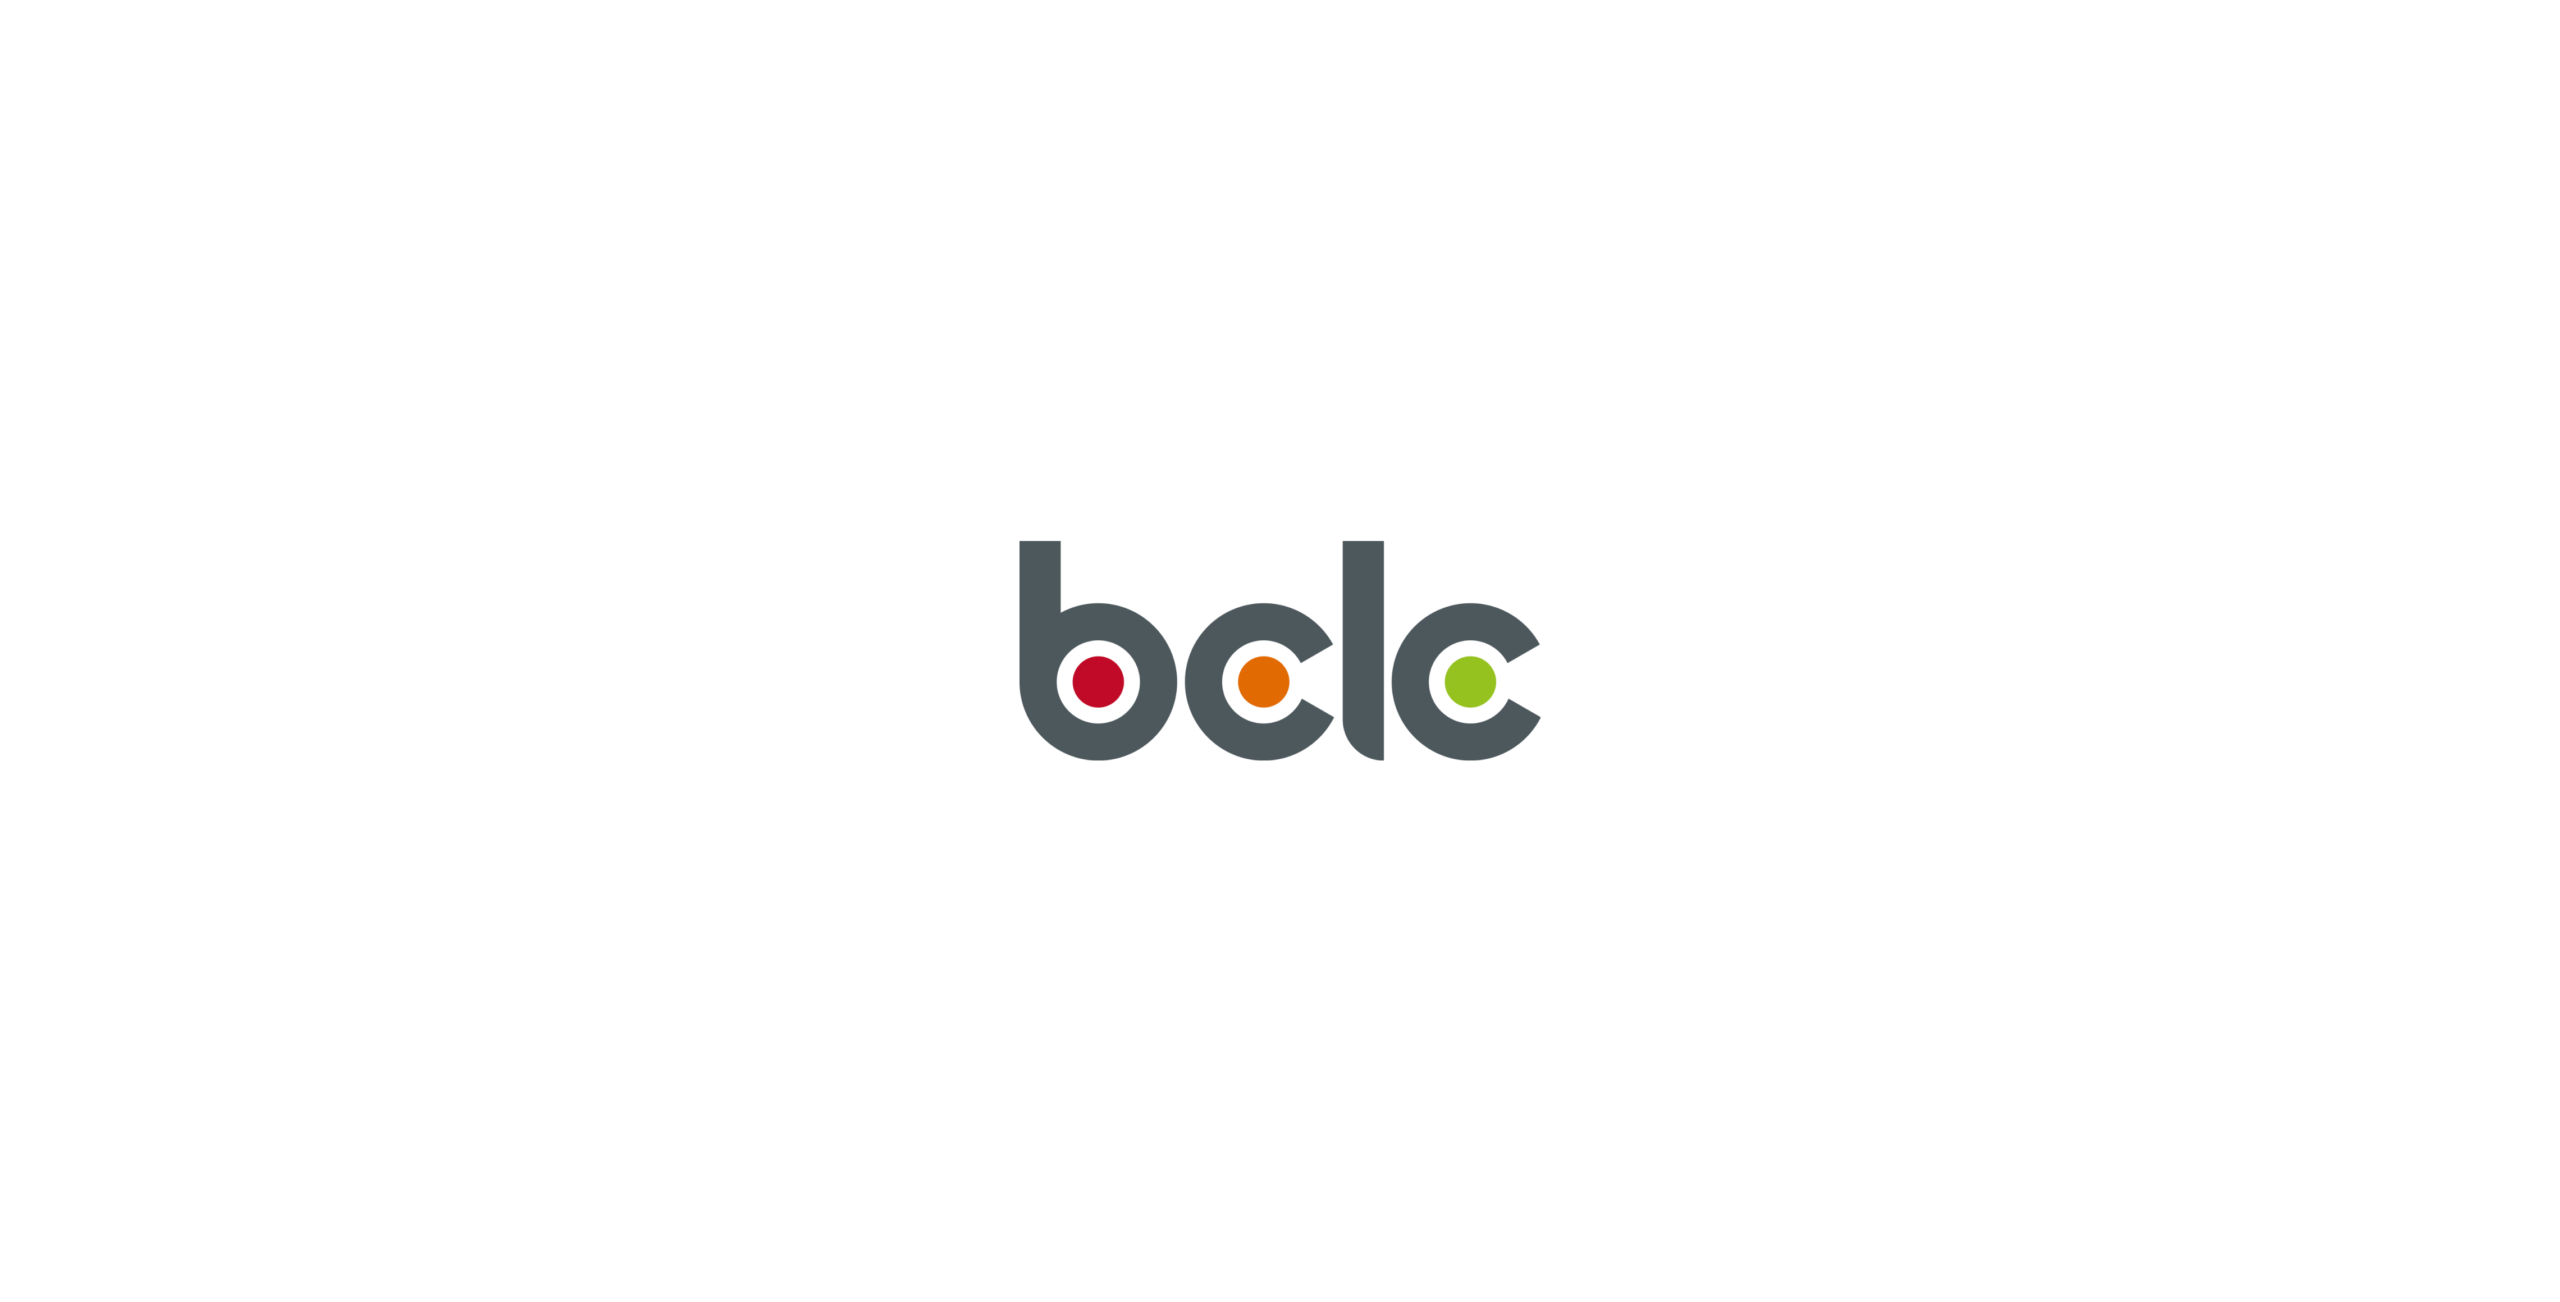 Bclc Logo